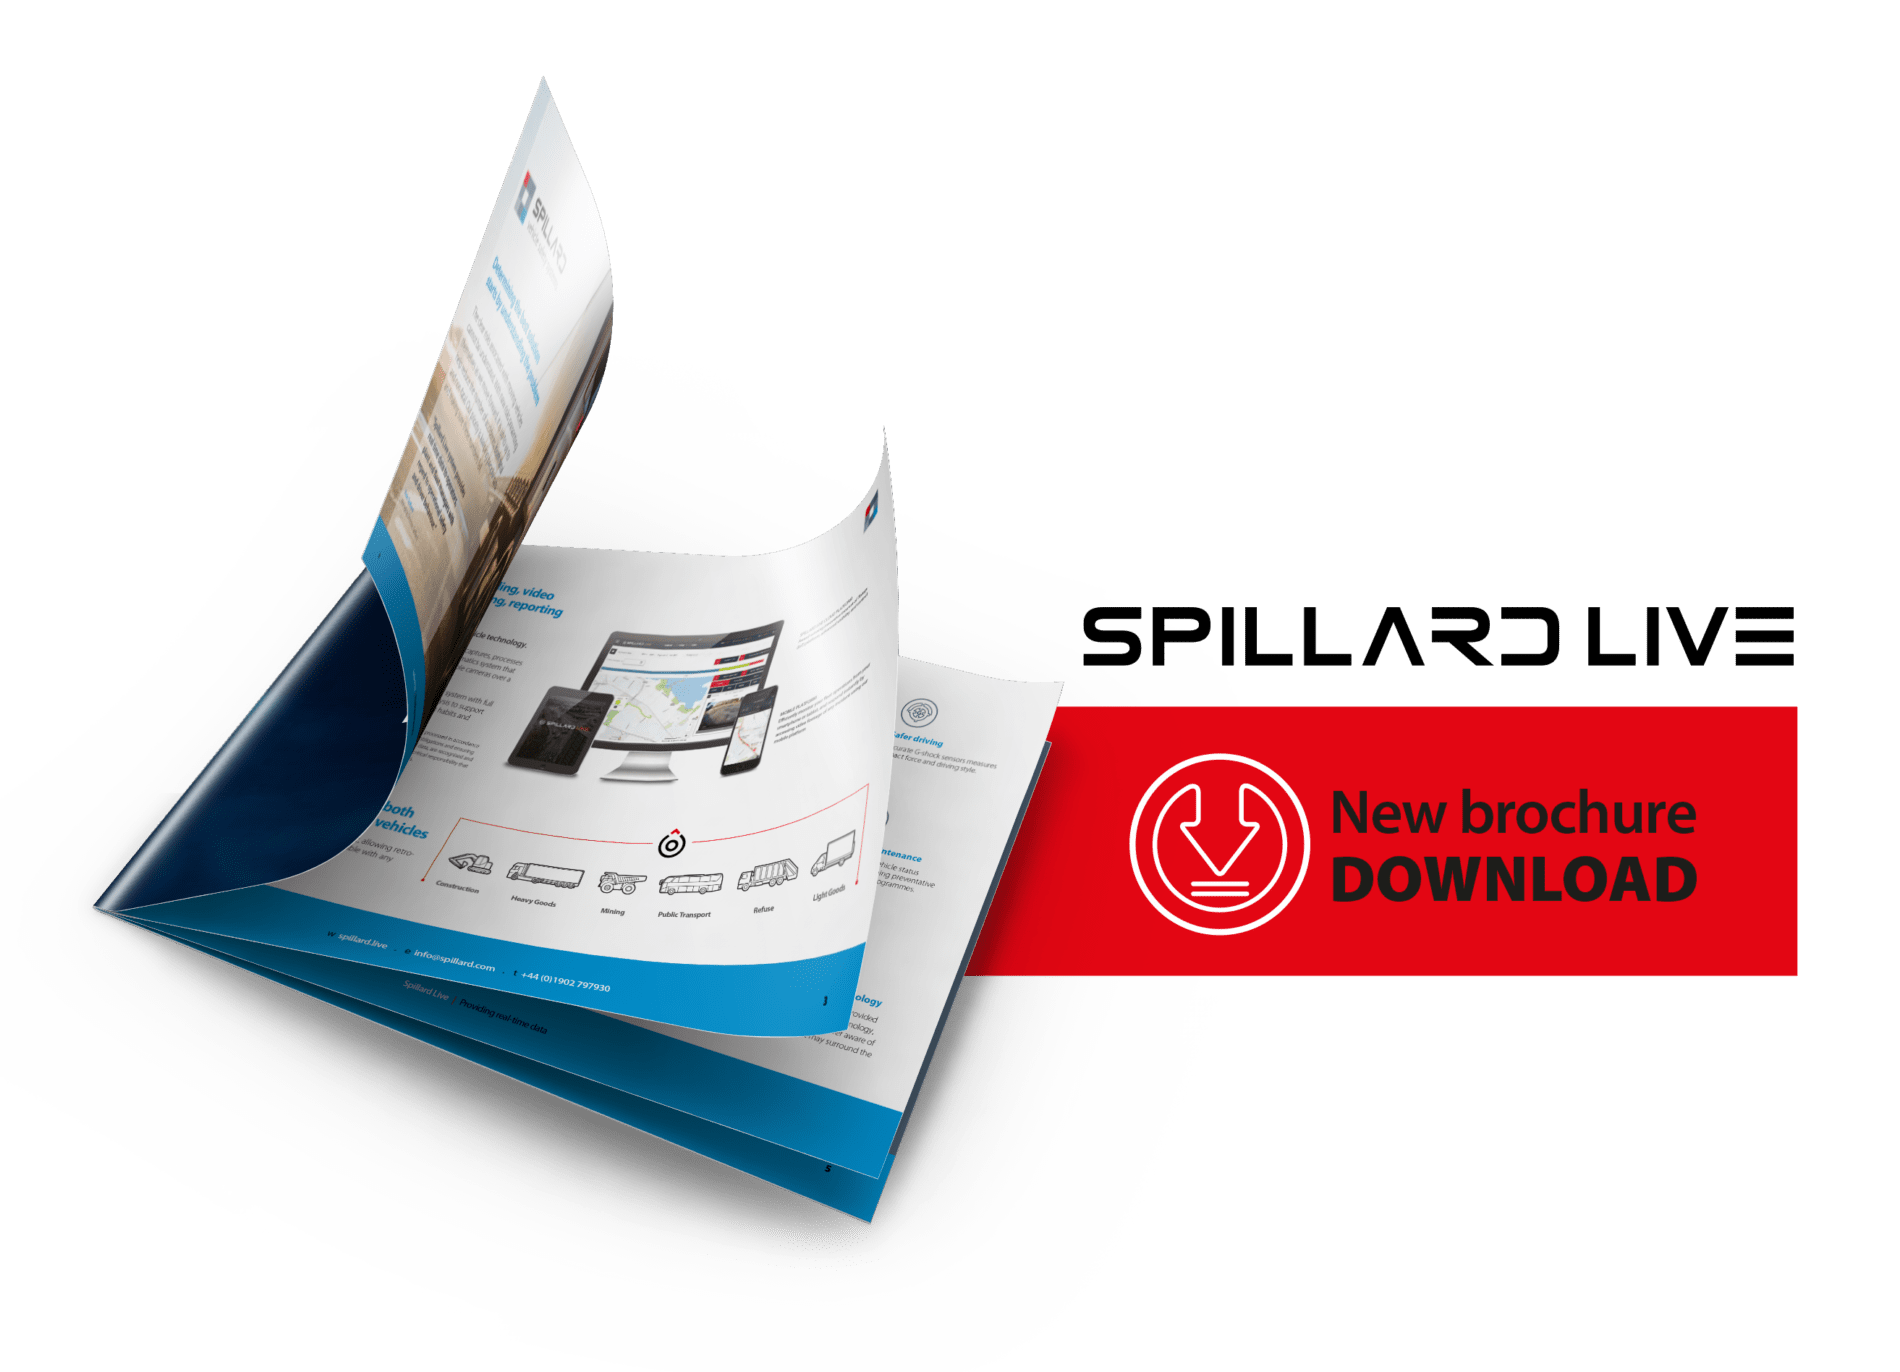 Vehicle Telematics - A4 Spillard LIVE brochure visual